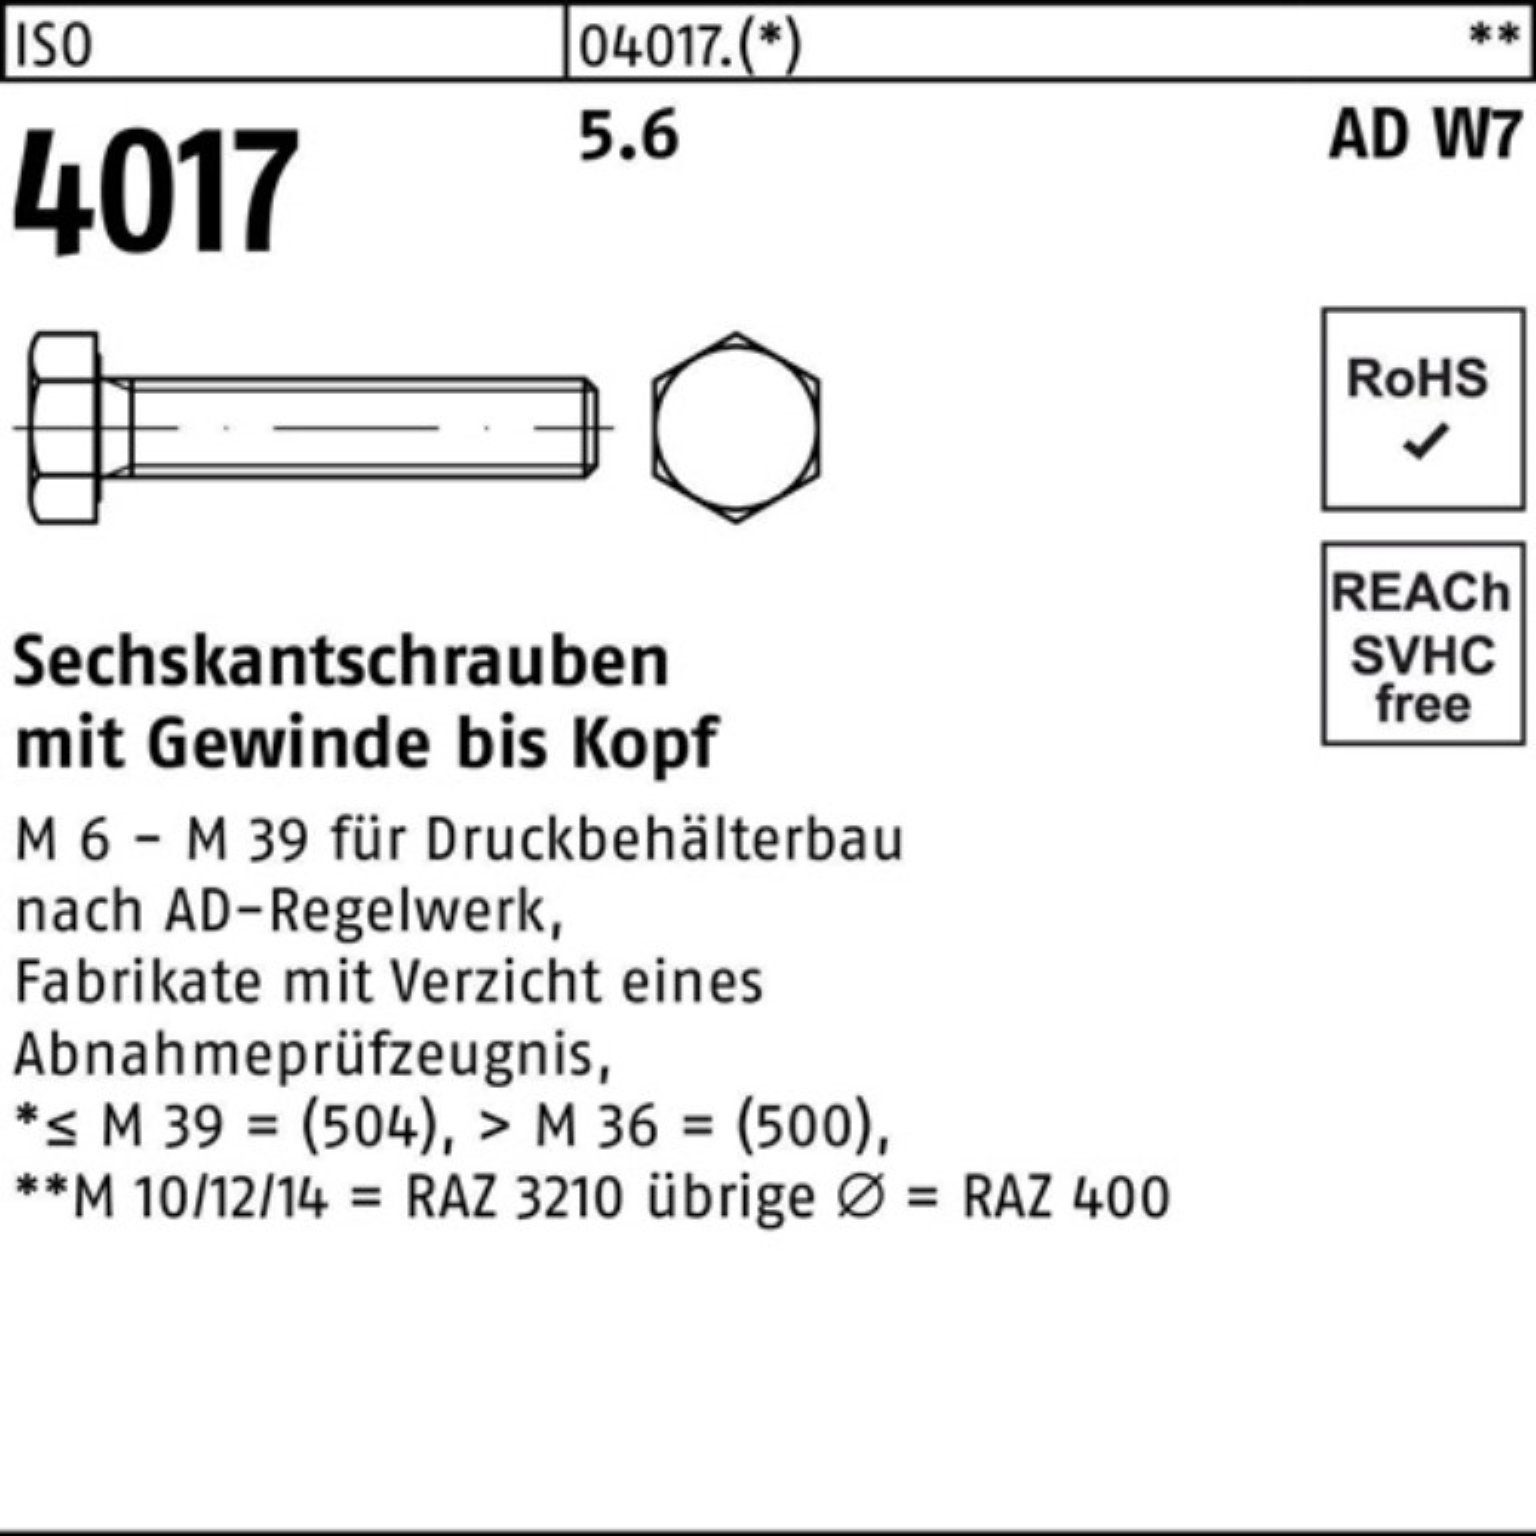 Bufab Sechskantschraube 4017 Sechskantschraube 55 I VG 100er W7 Stück ISO AD Pack 5.6 25 M24x